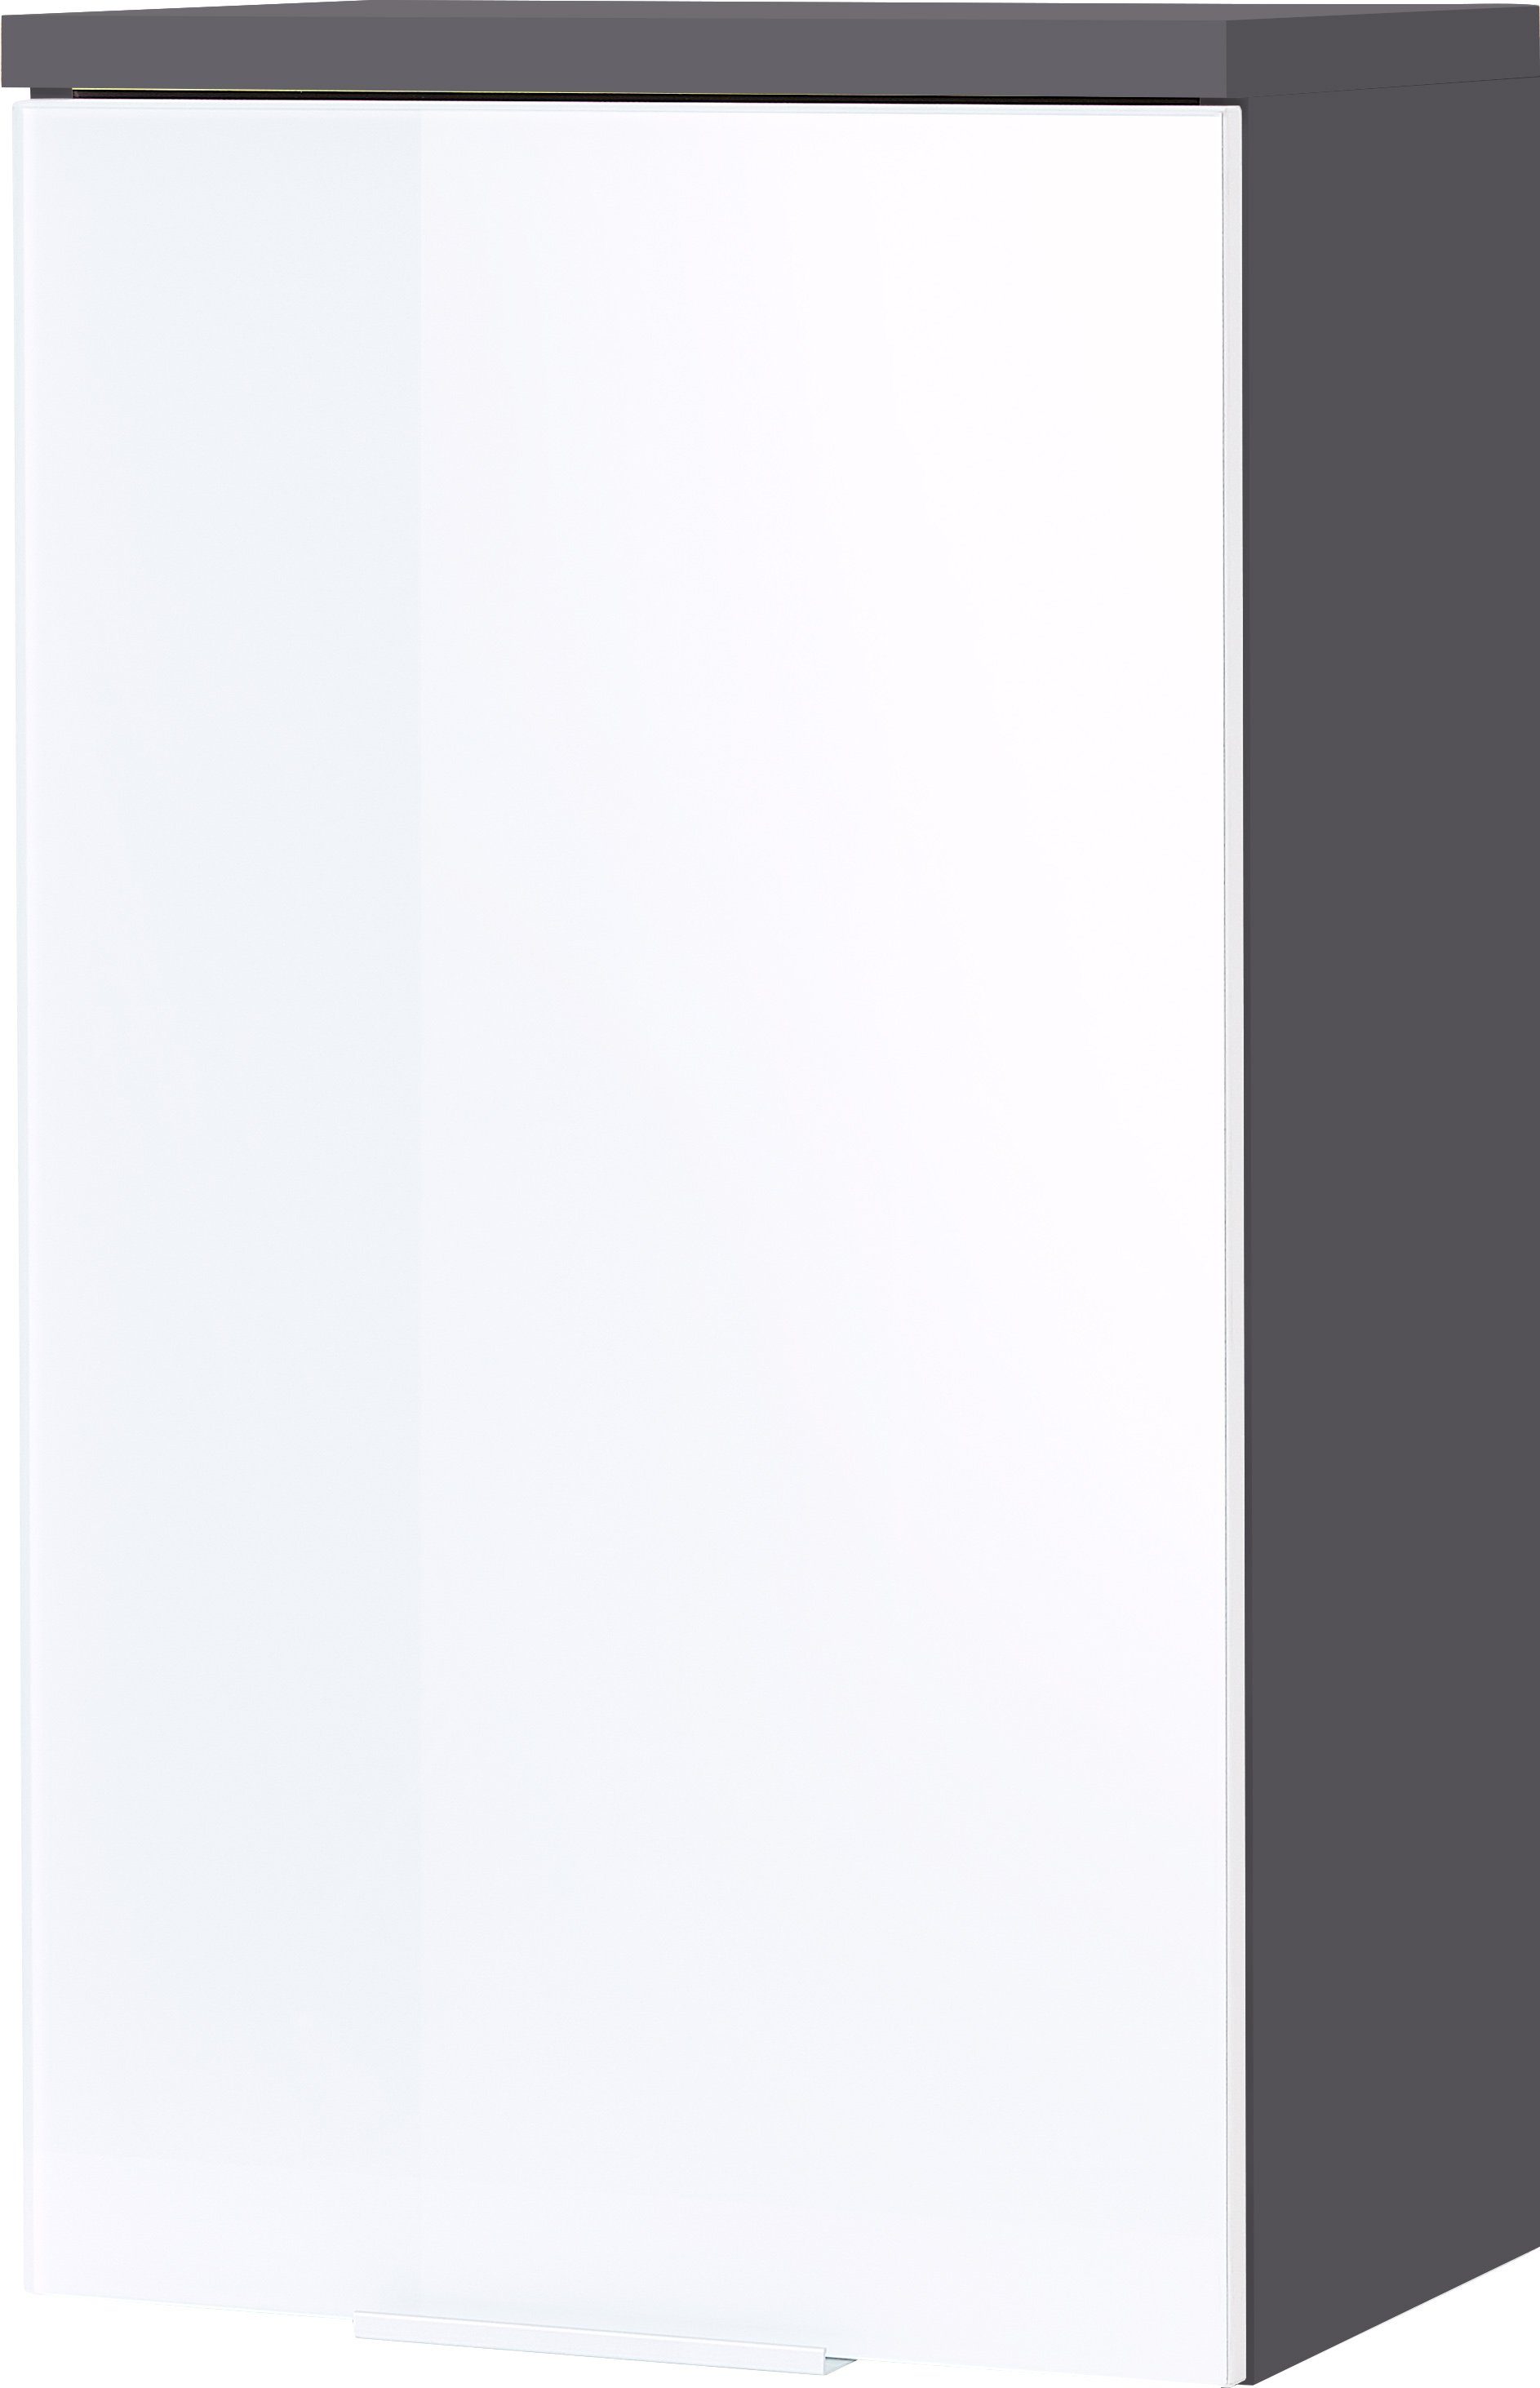 KADIMA DESIGN Midischrank LEINE Badehängeschrank Weiß Grau 39 x 69 x 27